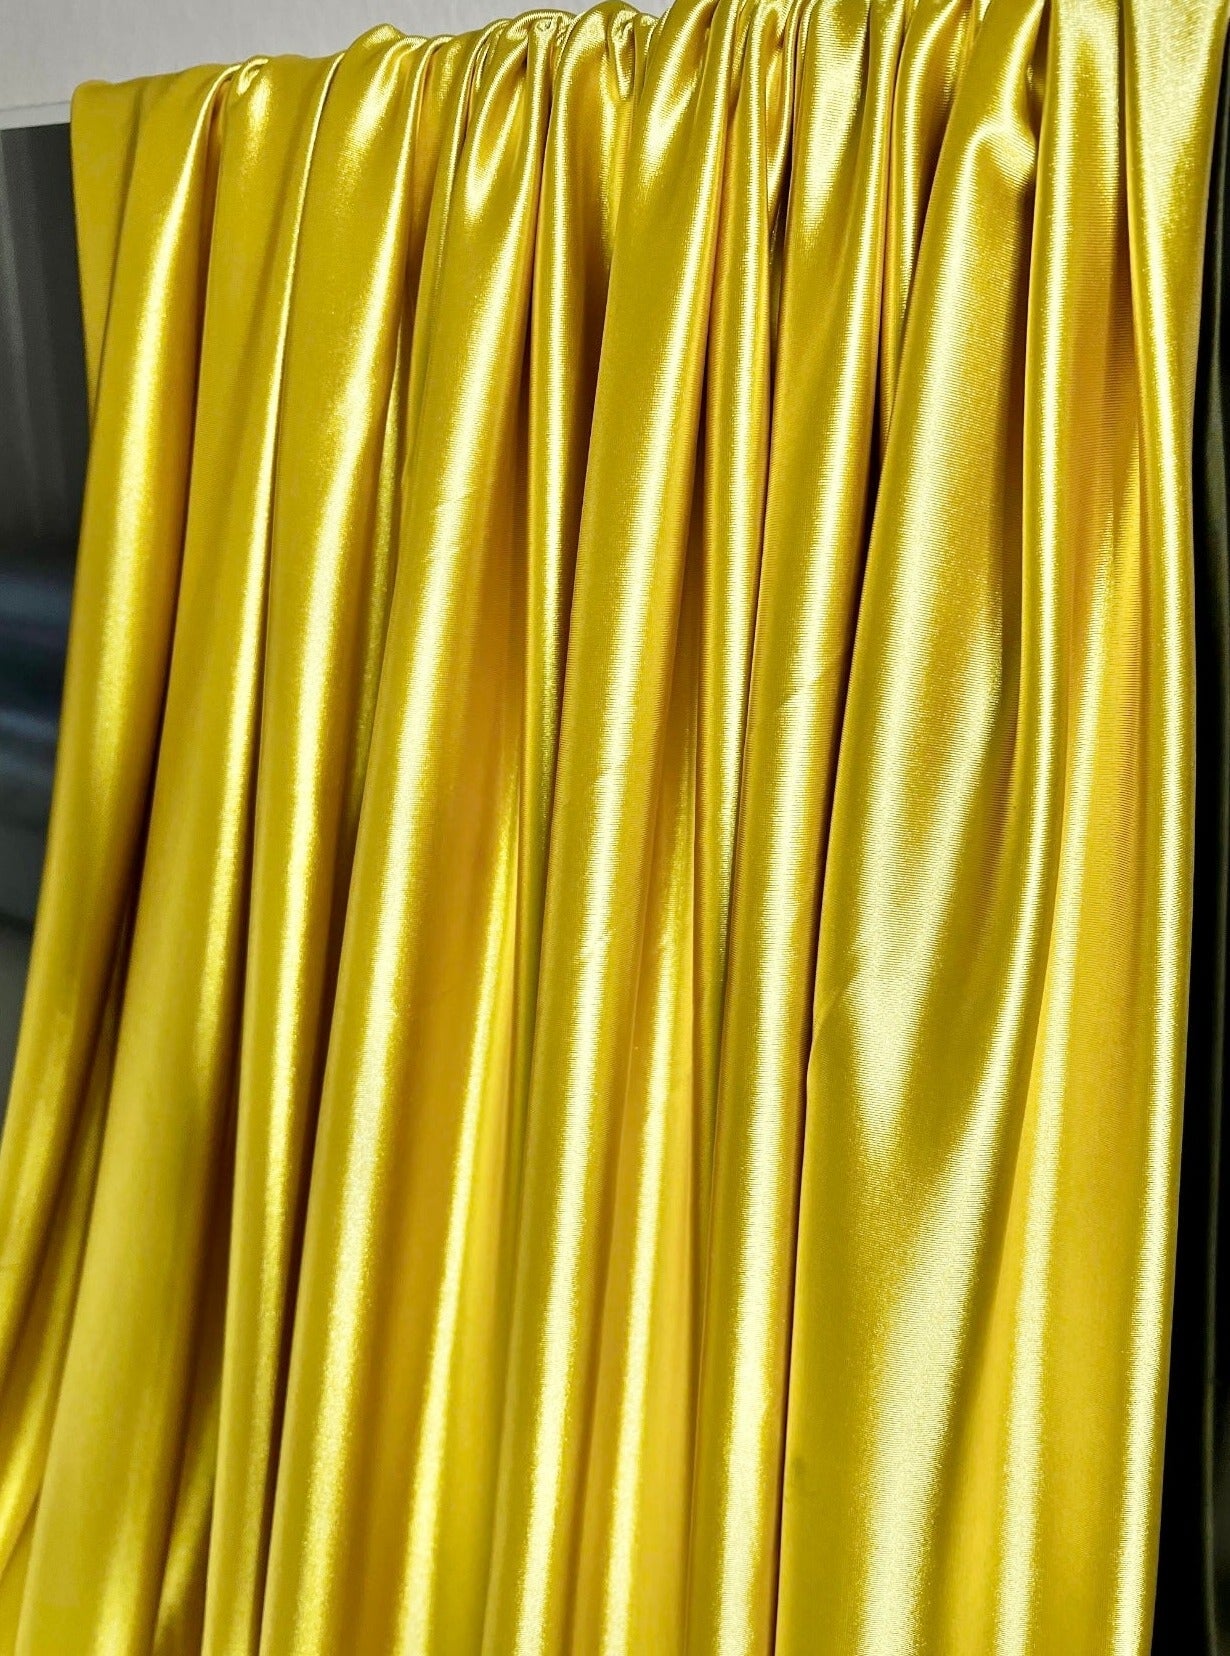 yellow nylon spandex, pineapple yellow nylon spandex, gold nylon spandex, fabric for legging, yellow fabric, buy fabric online, nylon spandex, 4 way stretch spandex, Nylon Spandex for woman, Nylon Spandex for bride Nylon Spandex on discount Nylon Spandex on sale